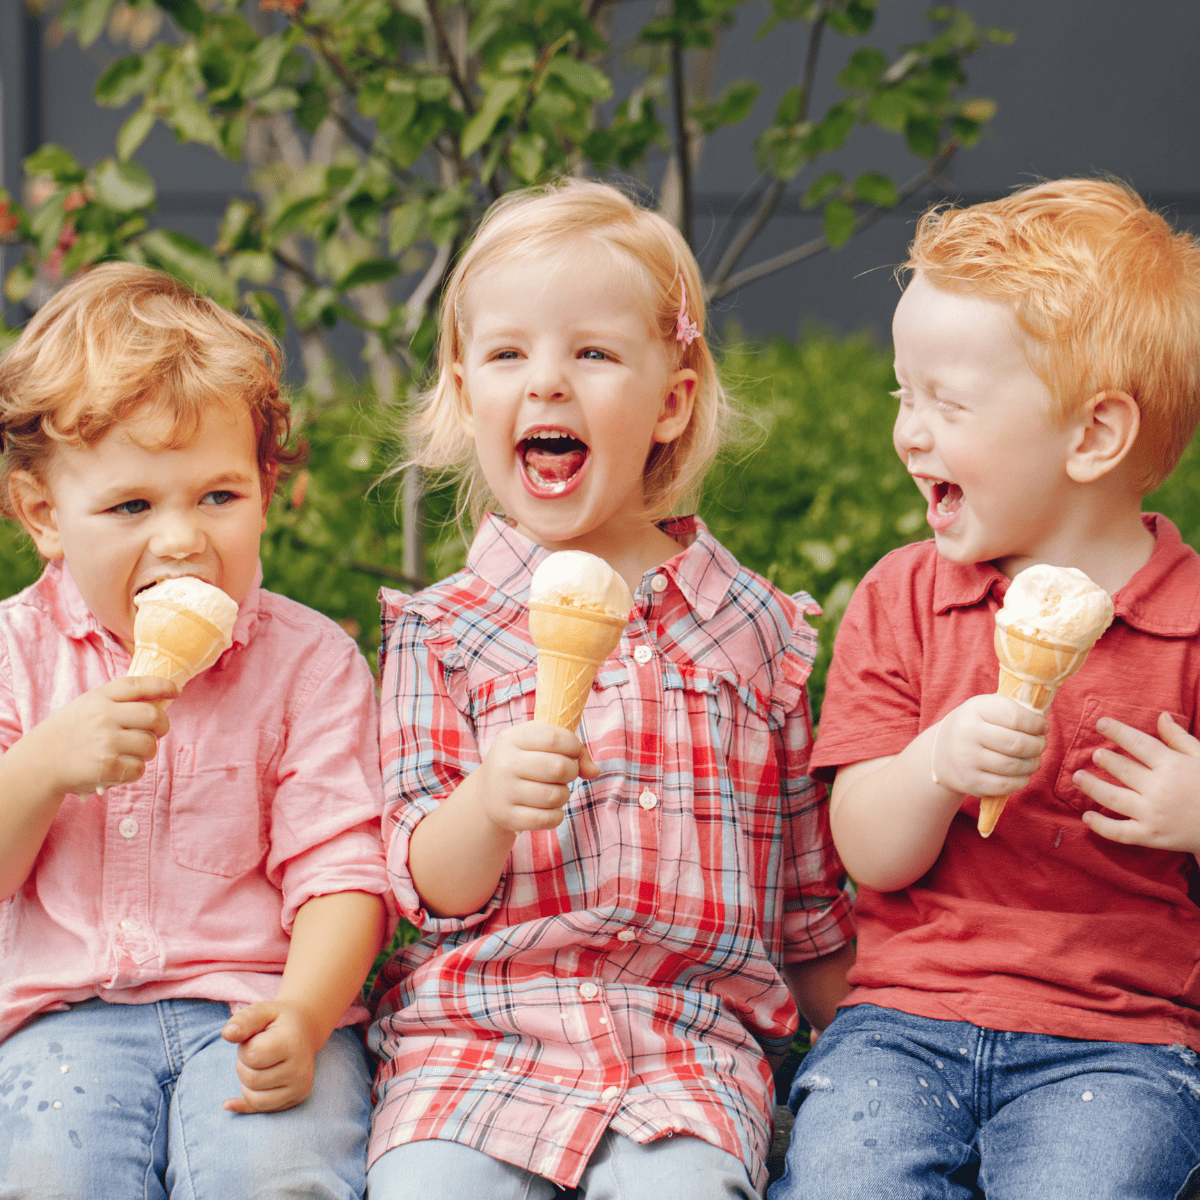 3 kids eating ice cream